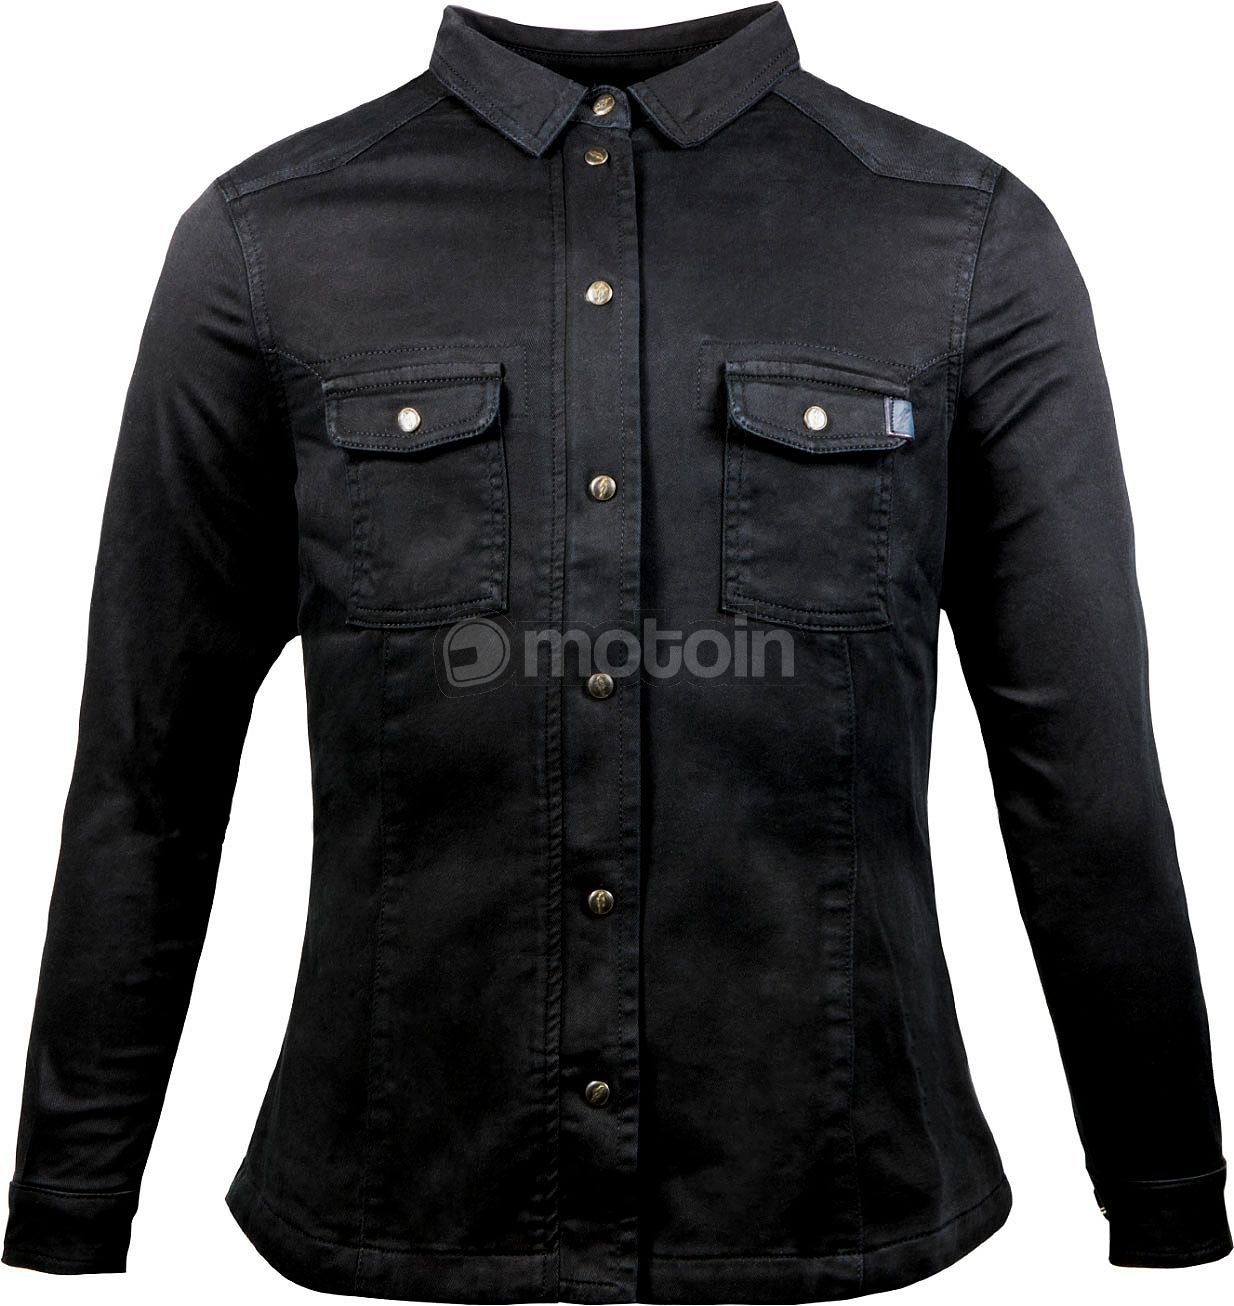 John Doe Motoshirt Basic, blouse/jacket women